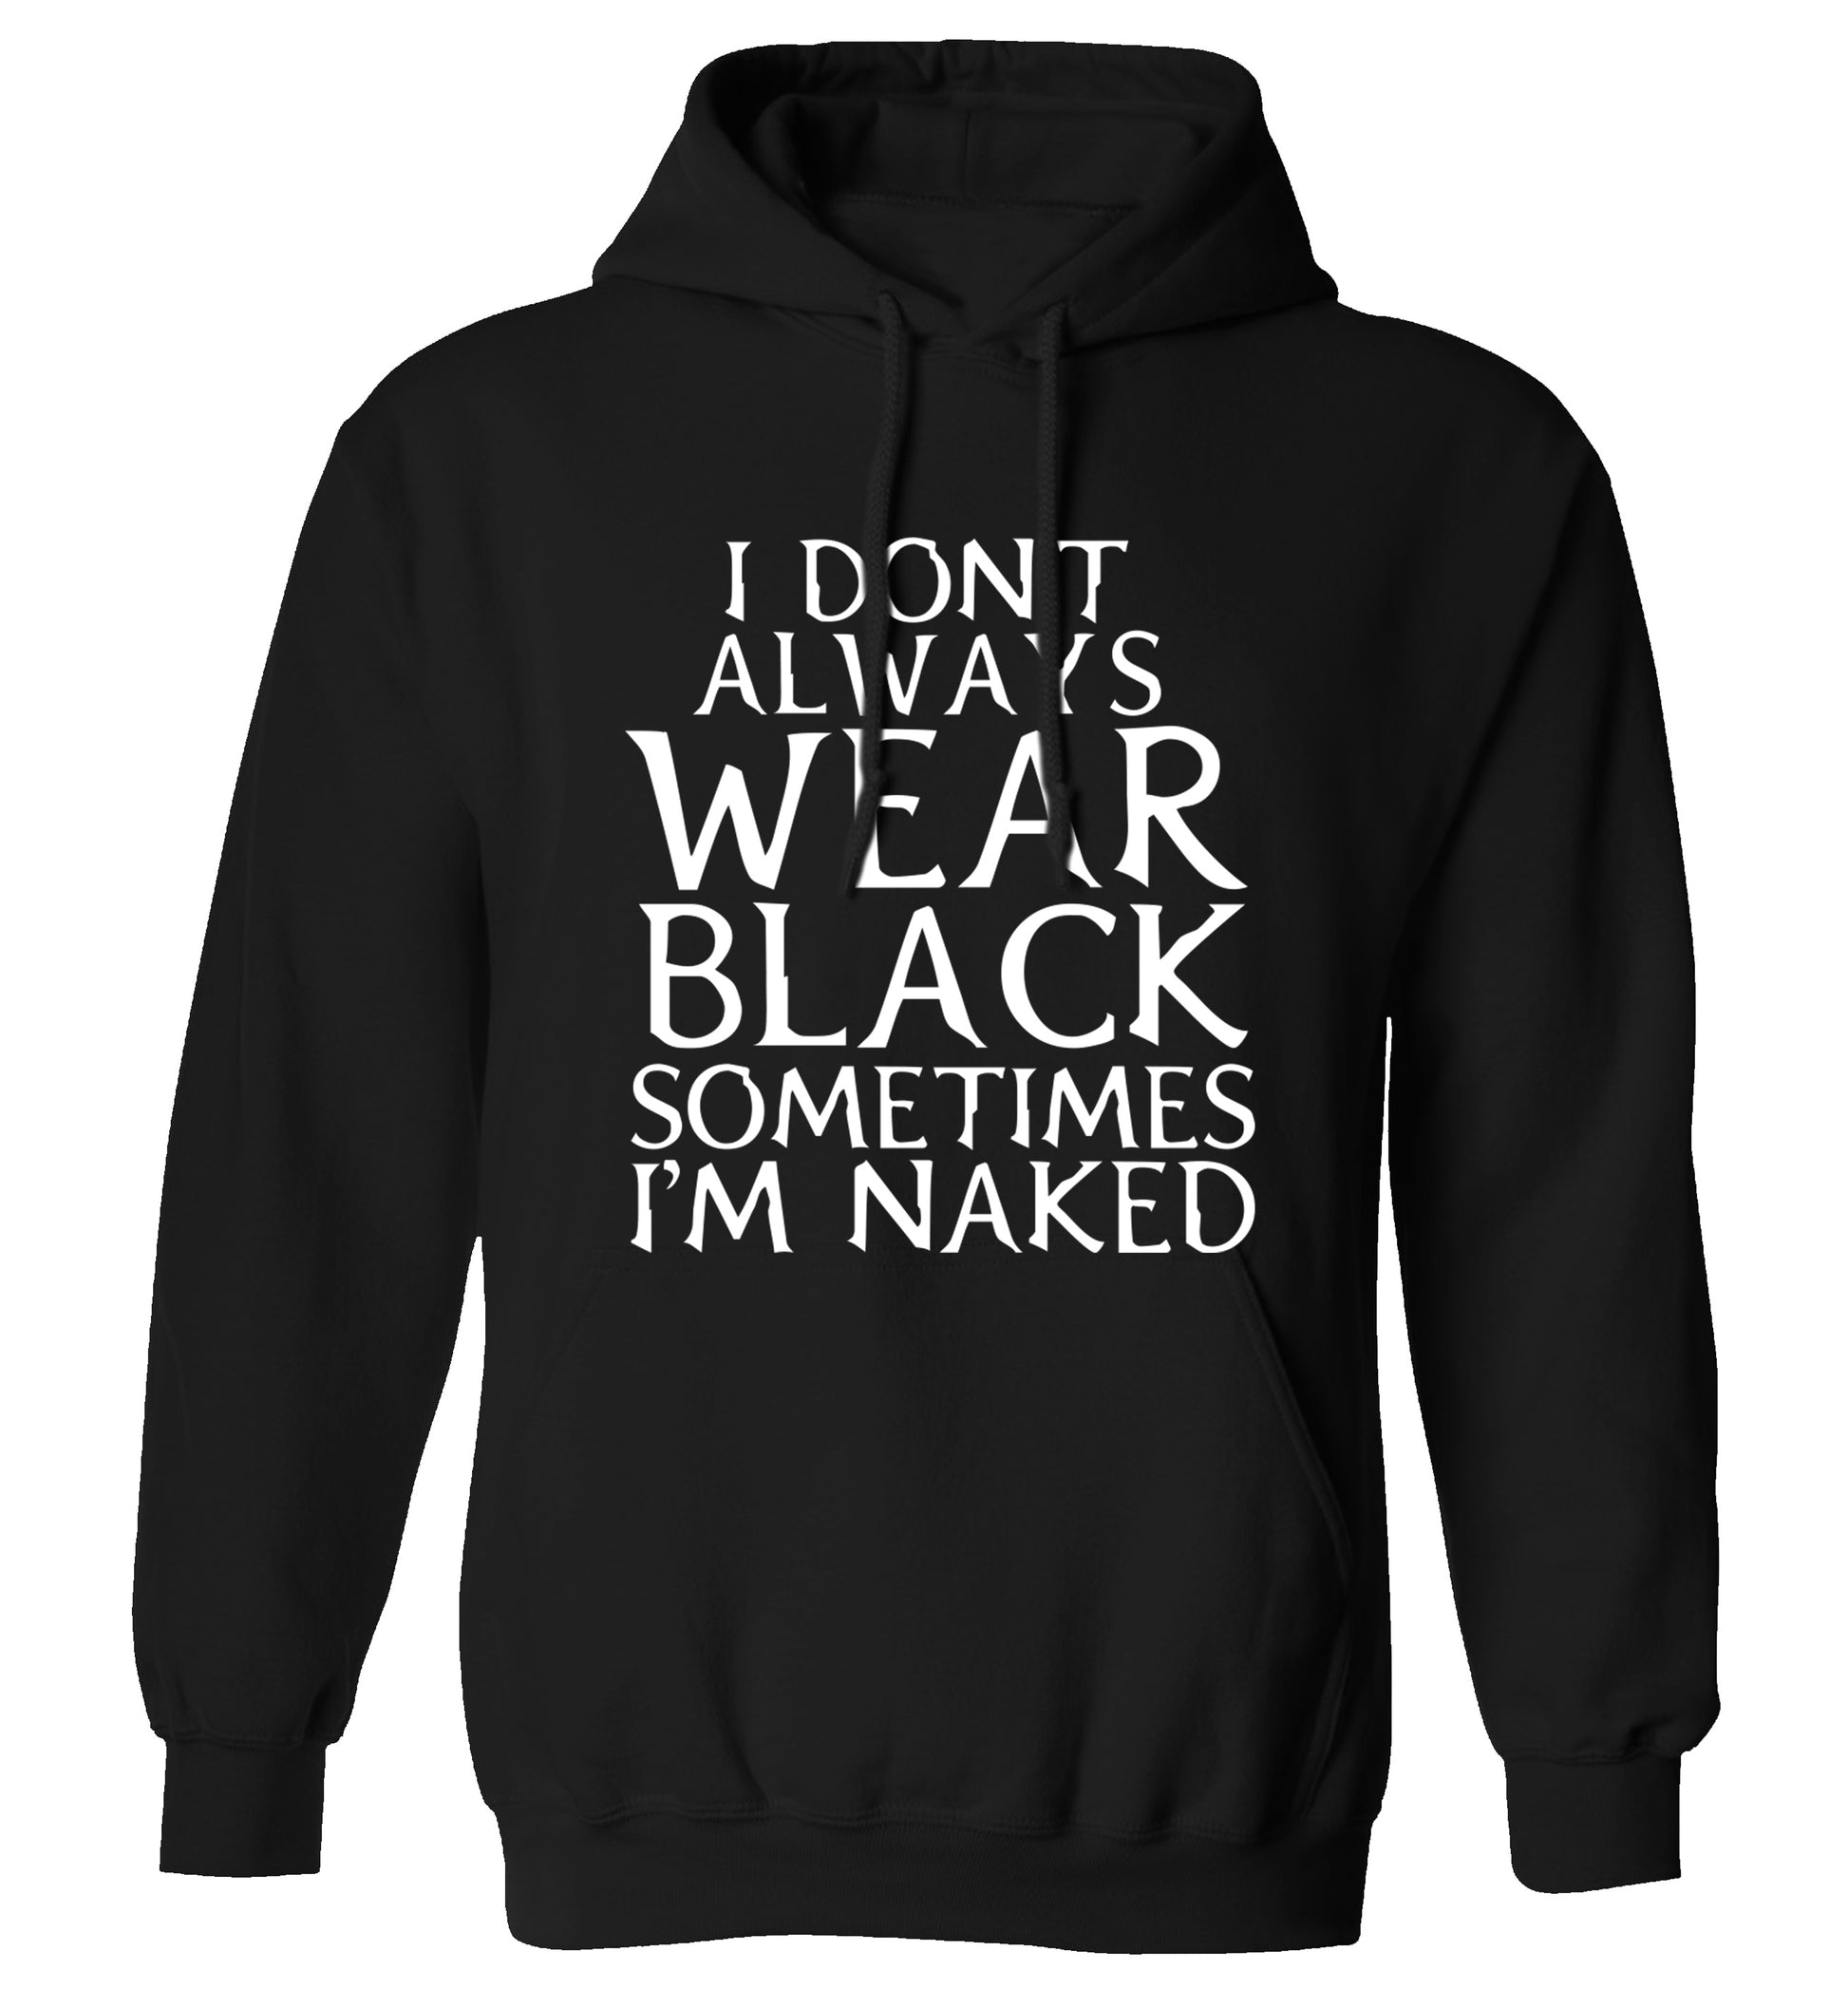 I don't always wear black sometimes I'm naked adults unisex black hoodie 2XL